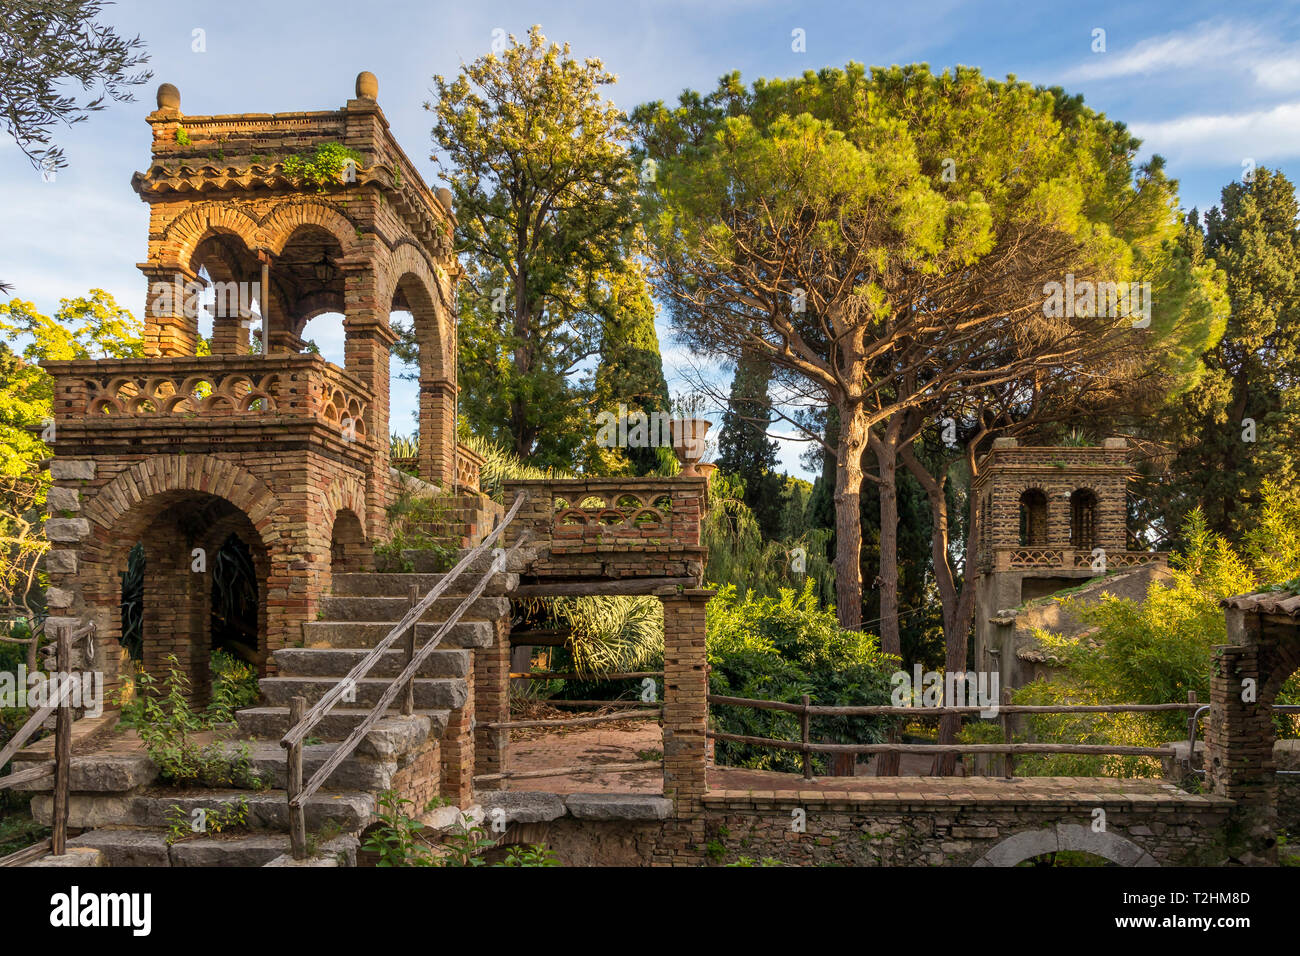 One of the so called 'Victorian Follies' inside the public garden Parco Duca di Cesaro, Taormina, Sicily, Italy, Europe Stock Photo